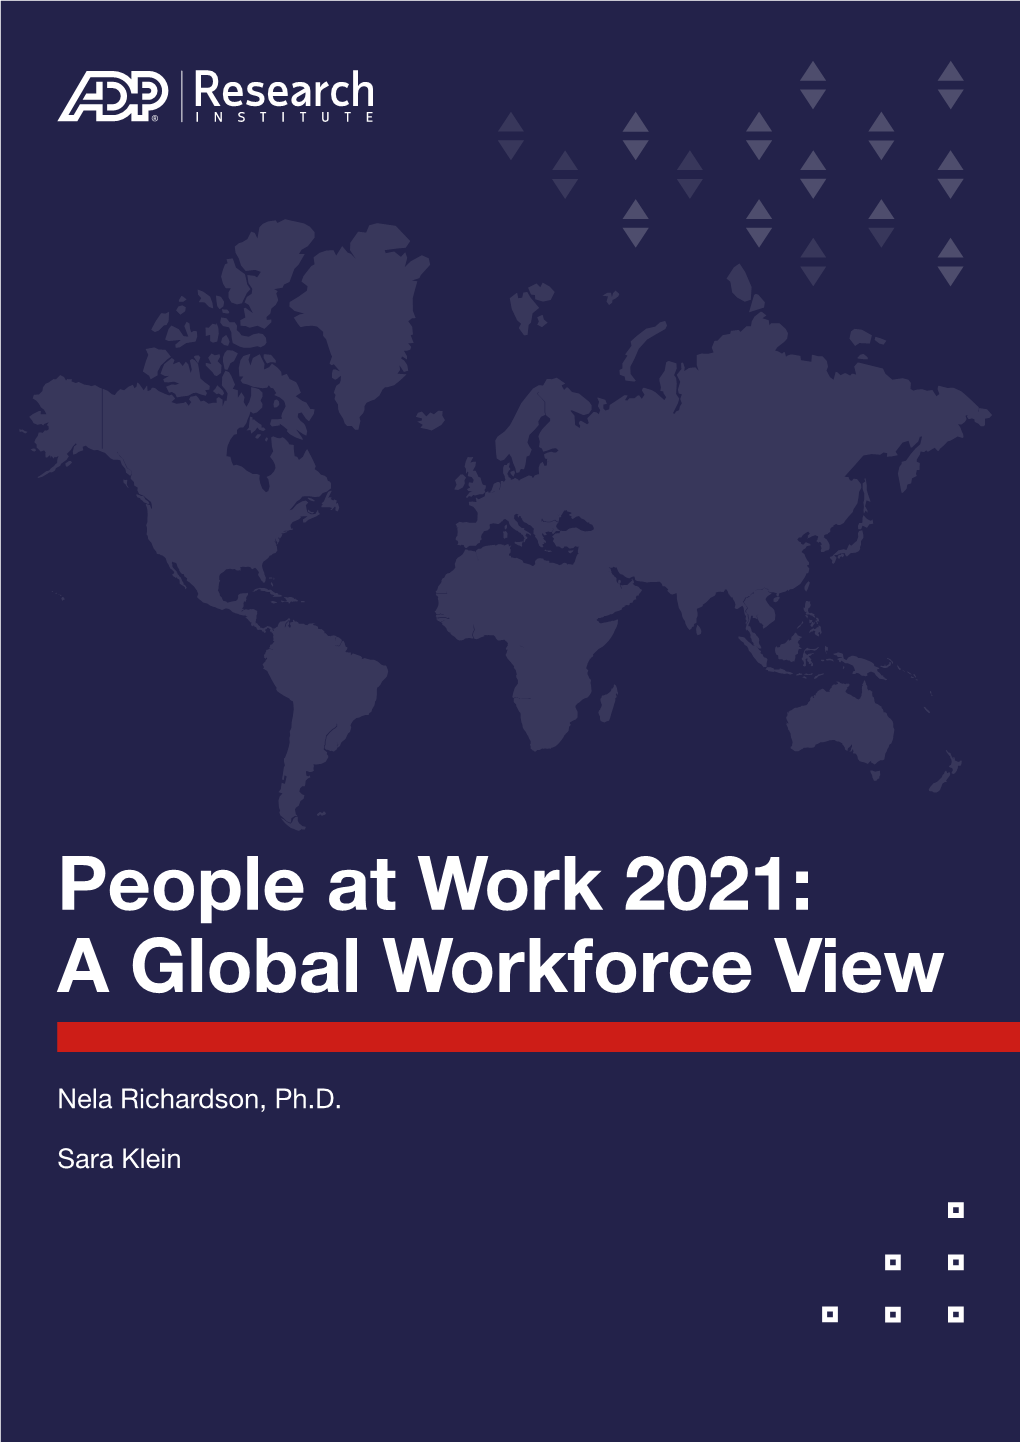 A Global Workforce View